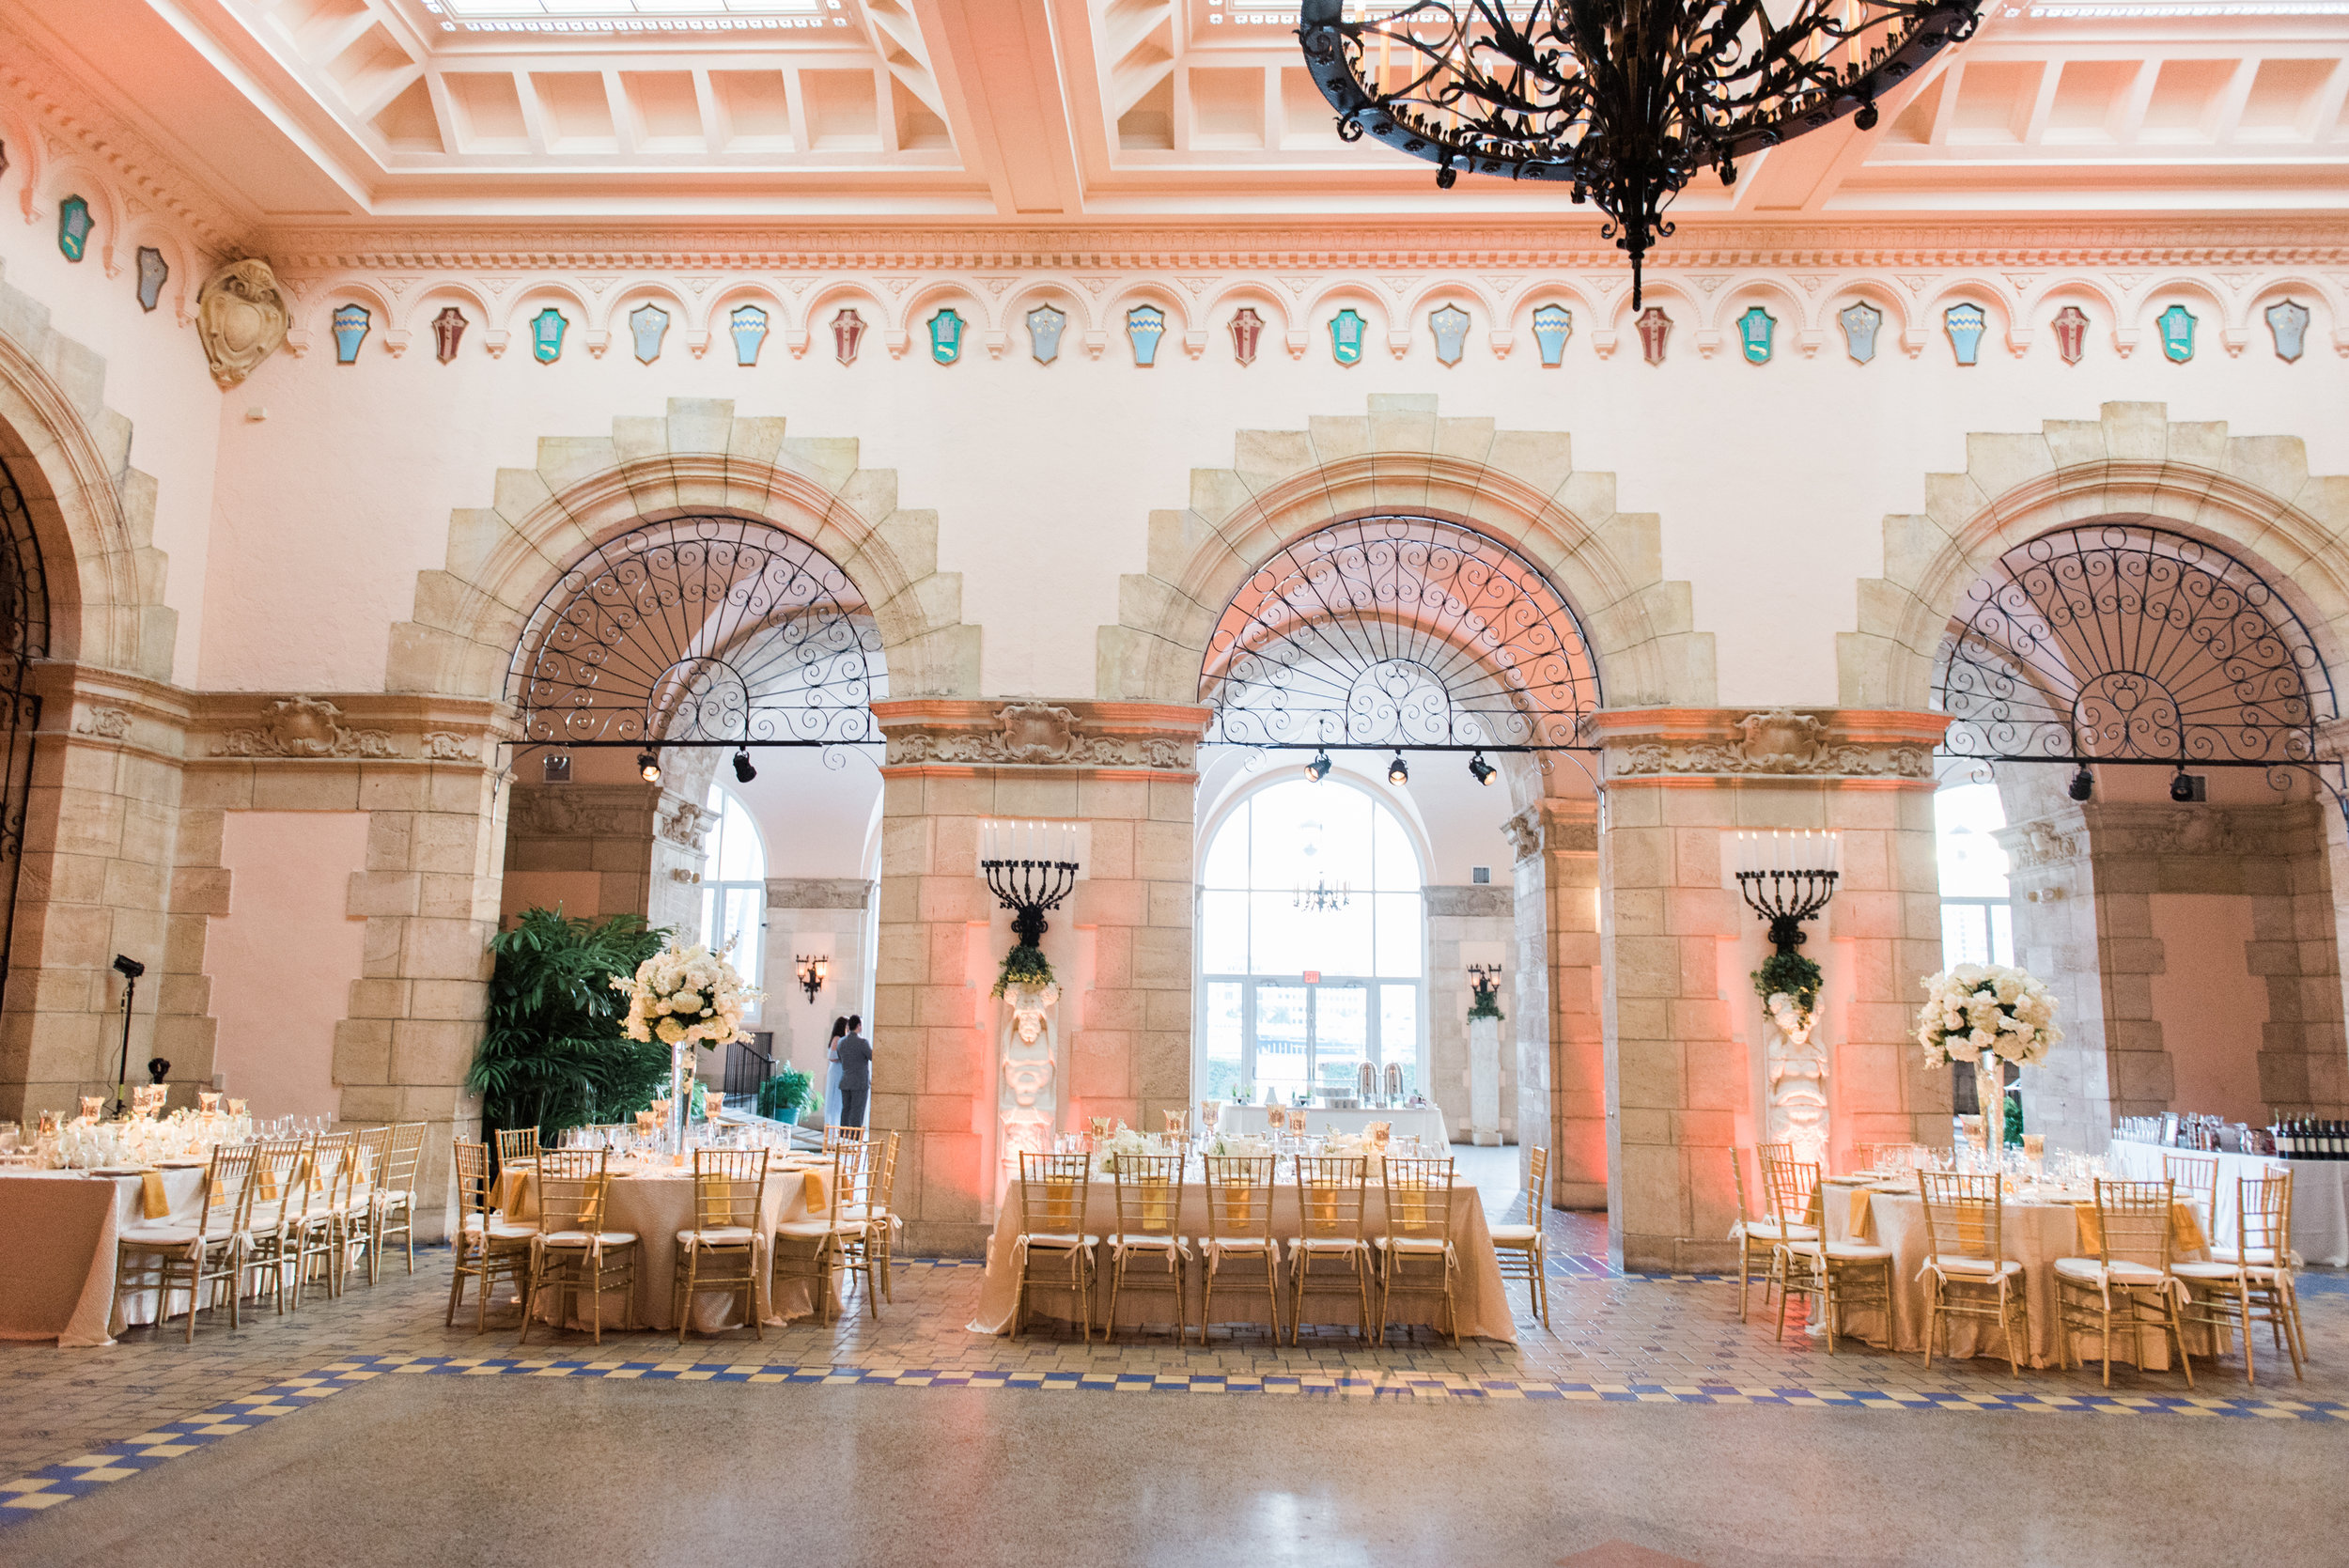 Flagler Museum Palm Beach Wedding Reception - The Overwhelmed Bride Wedding Blog